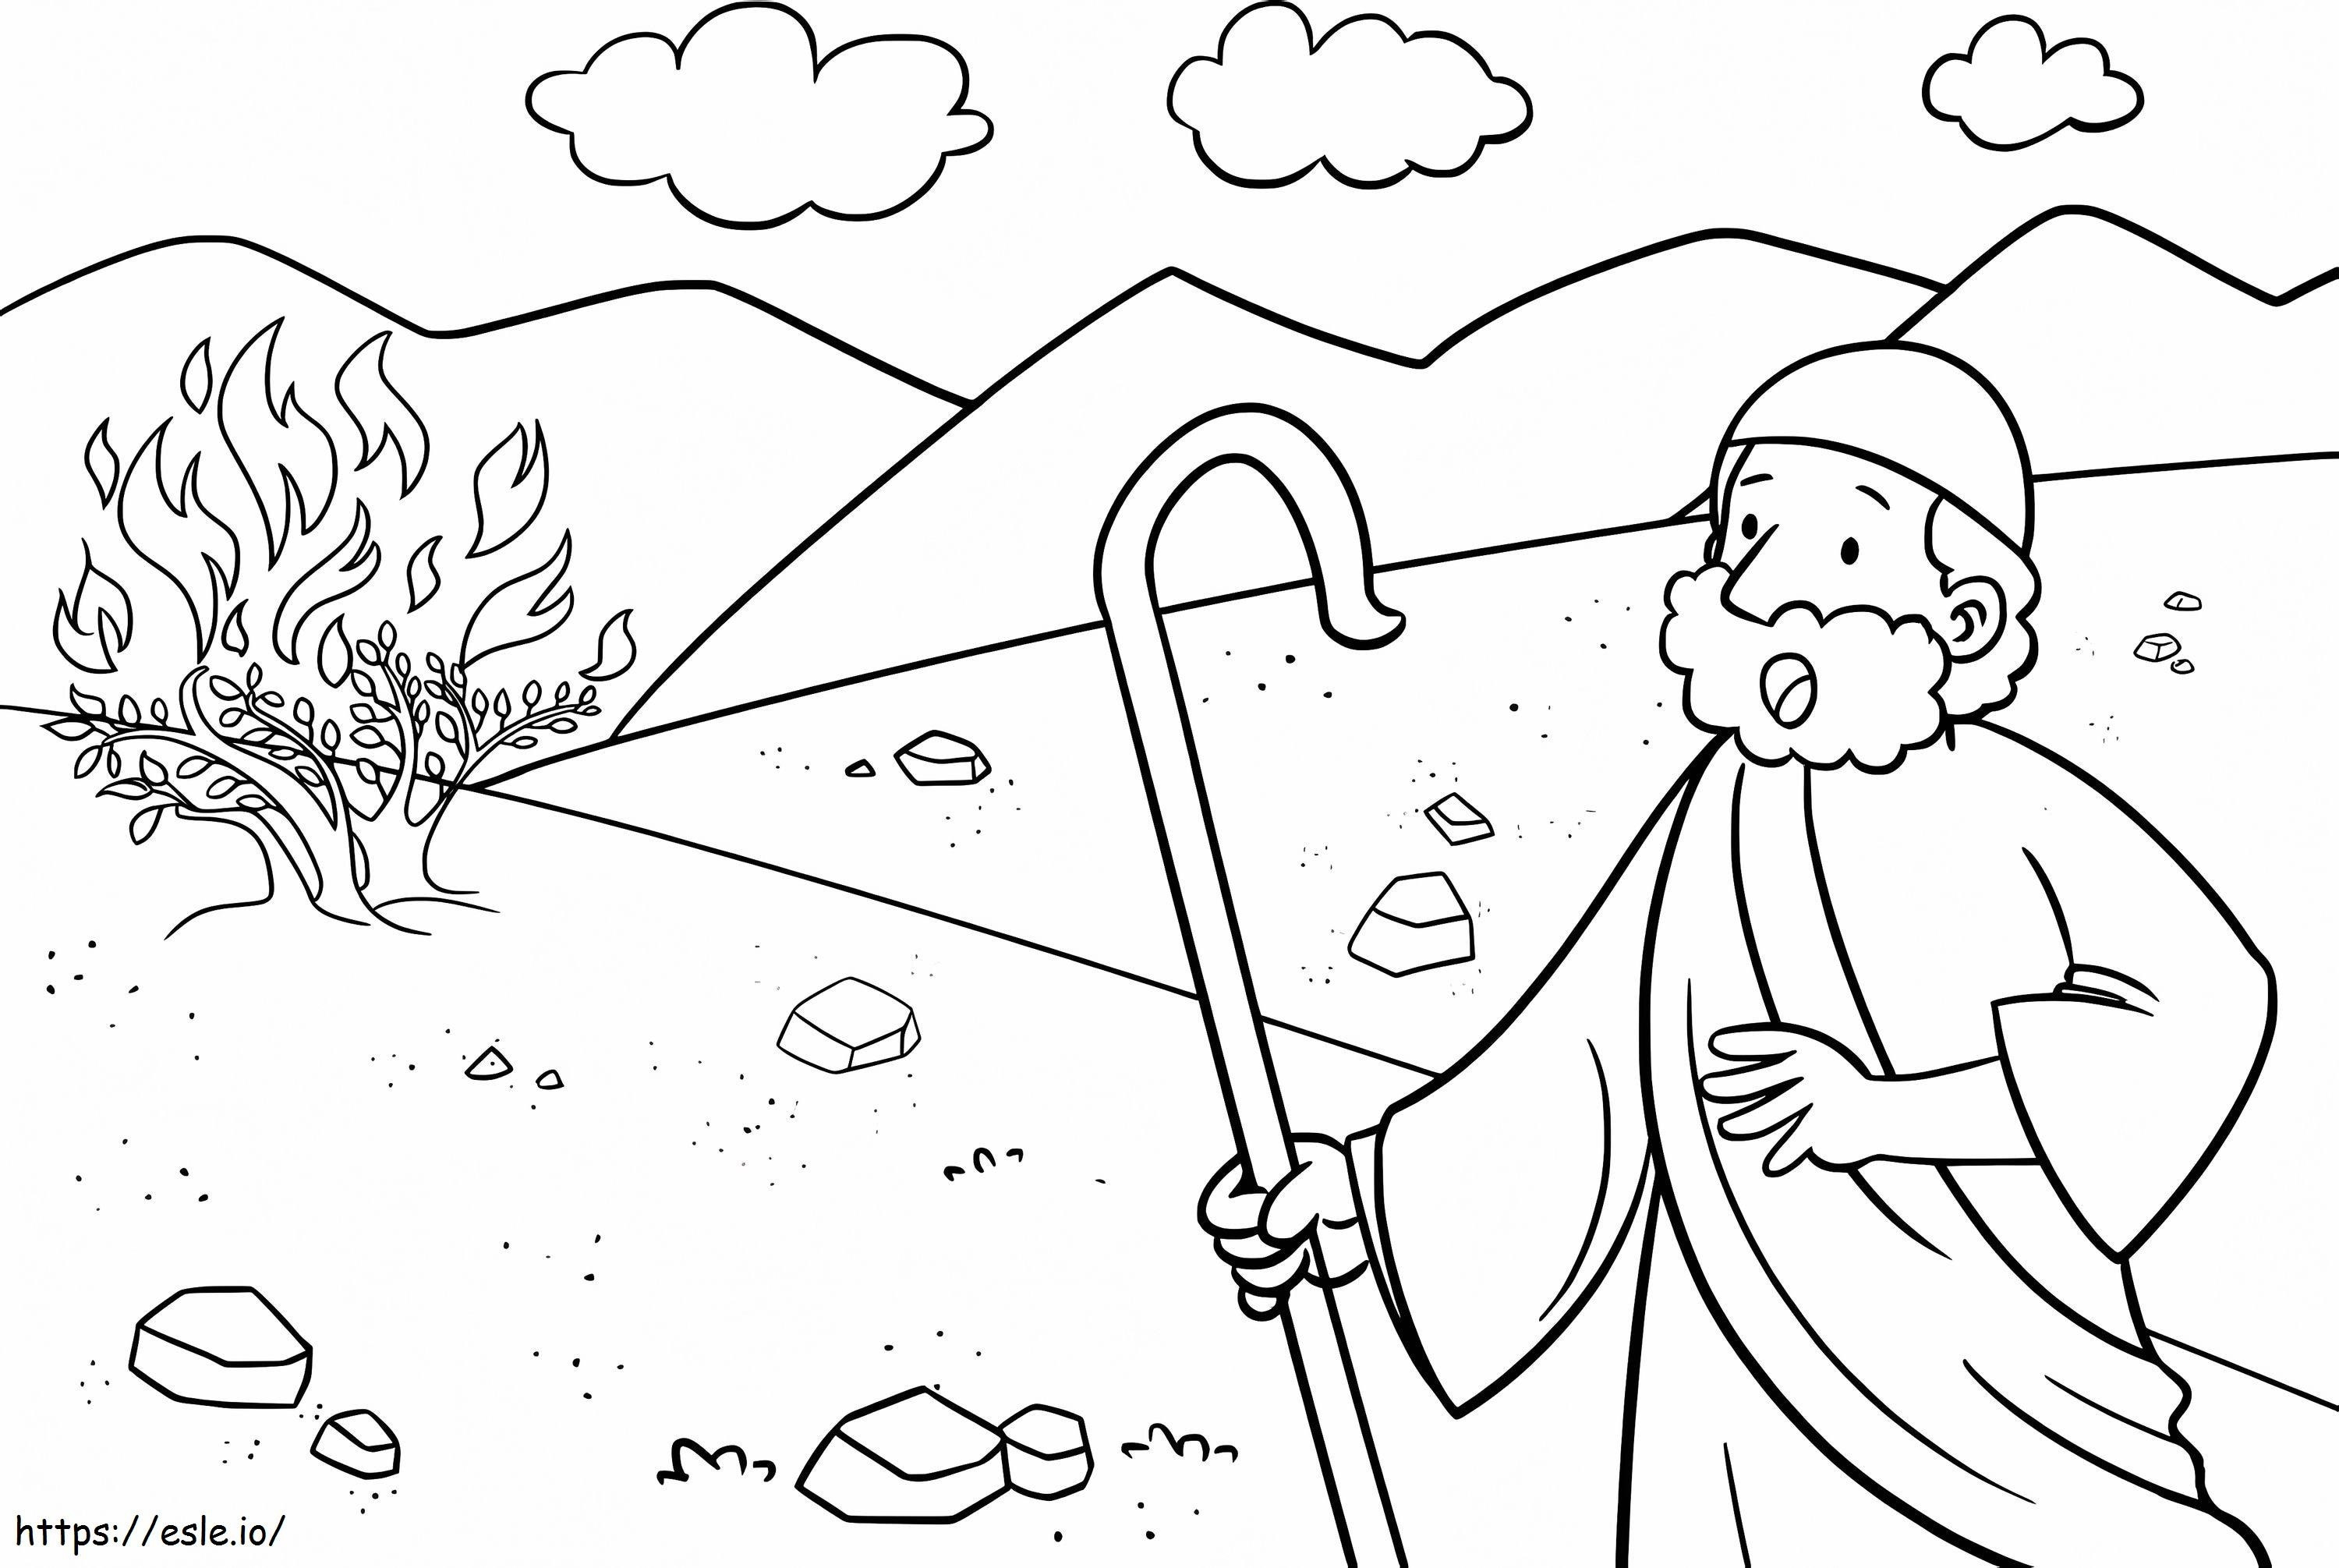 Moses And Burning Bush coloring page